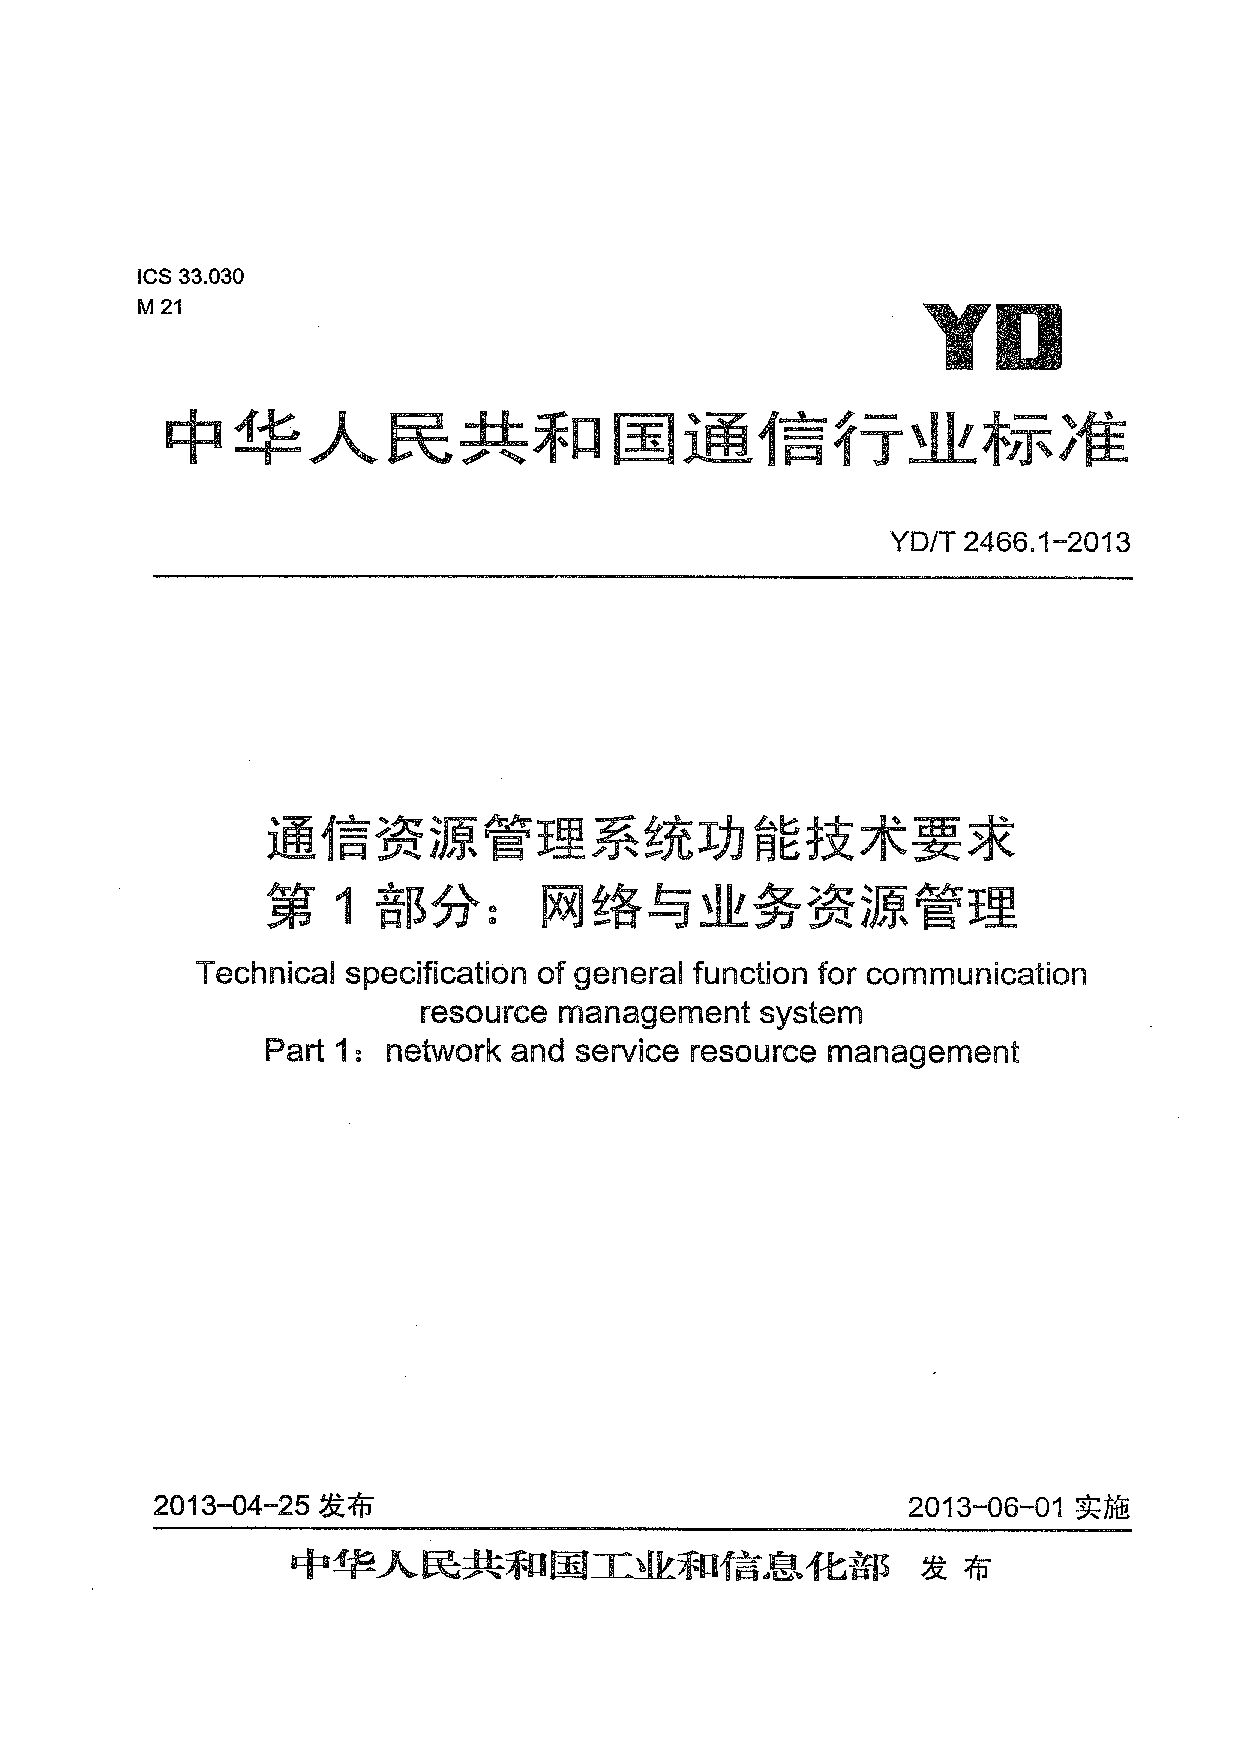 YD/T 2466.1-2013封面图